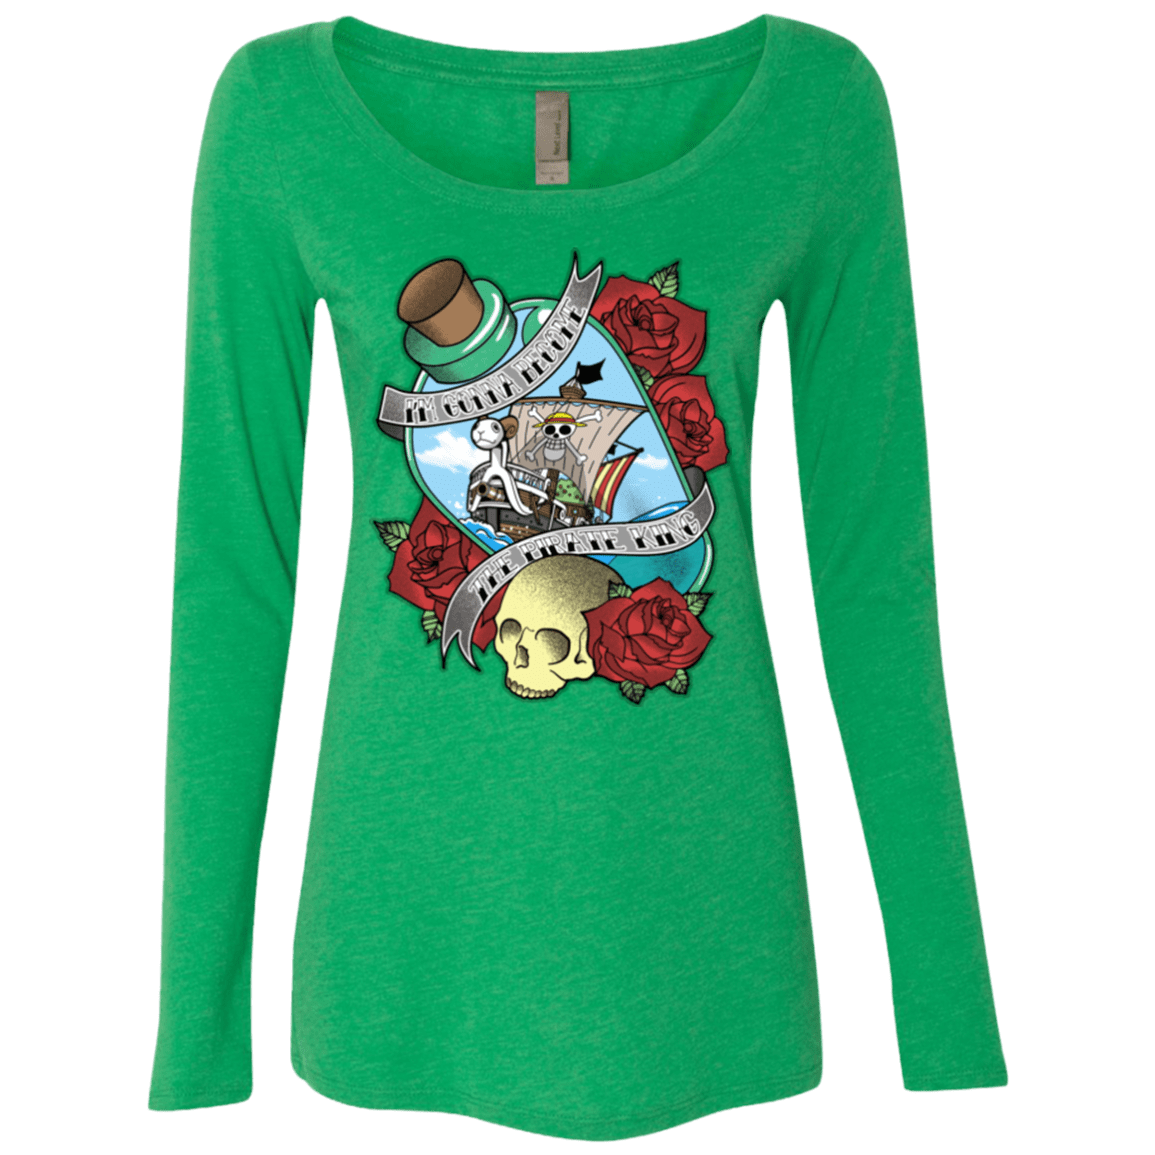 T-Shirts Envy / Small The Pirate King Women's Triblend Long Sleeve Shirt